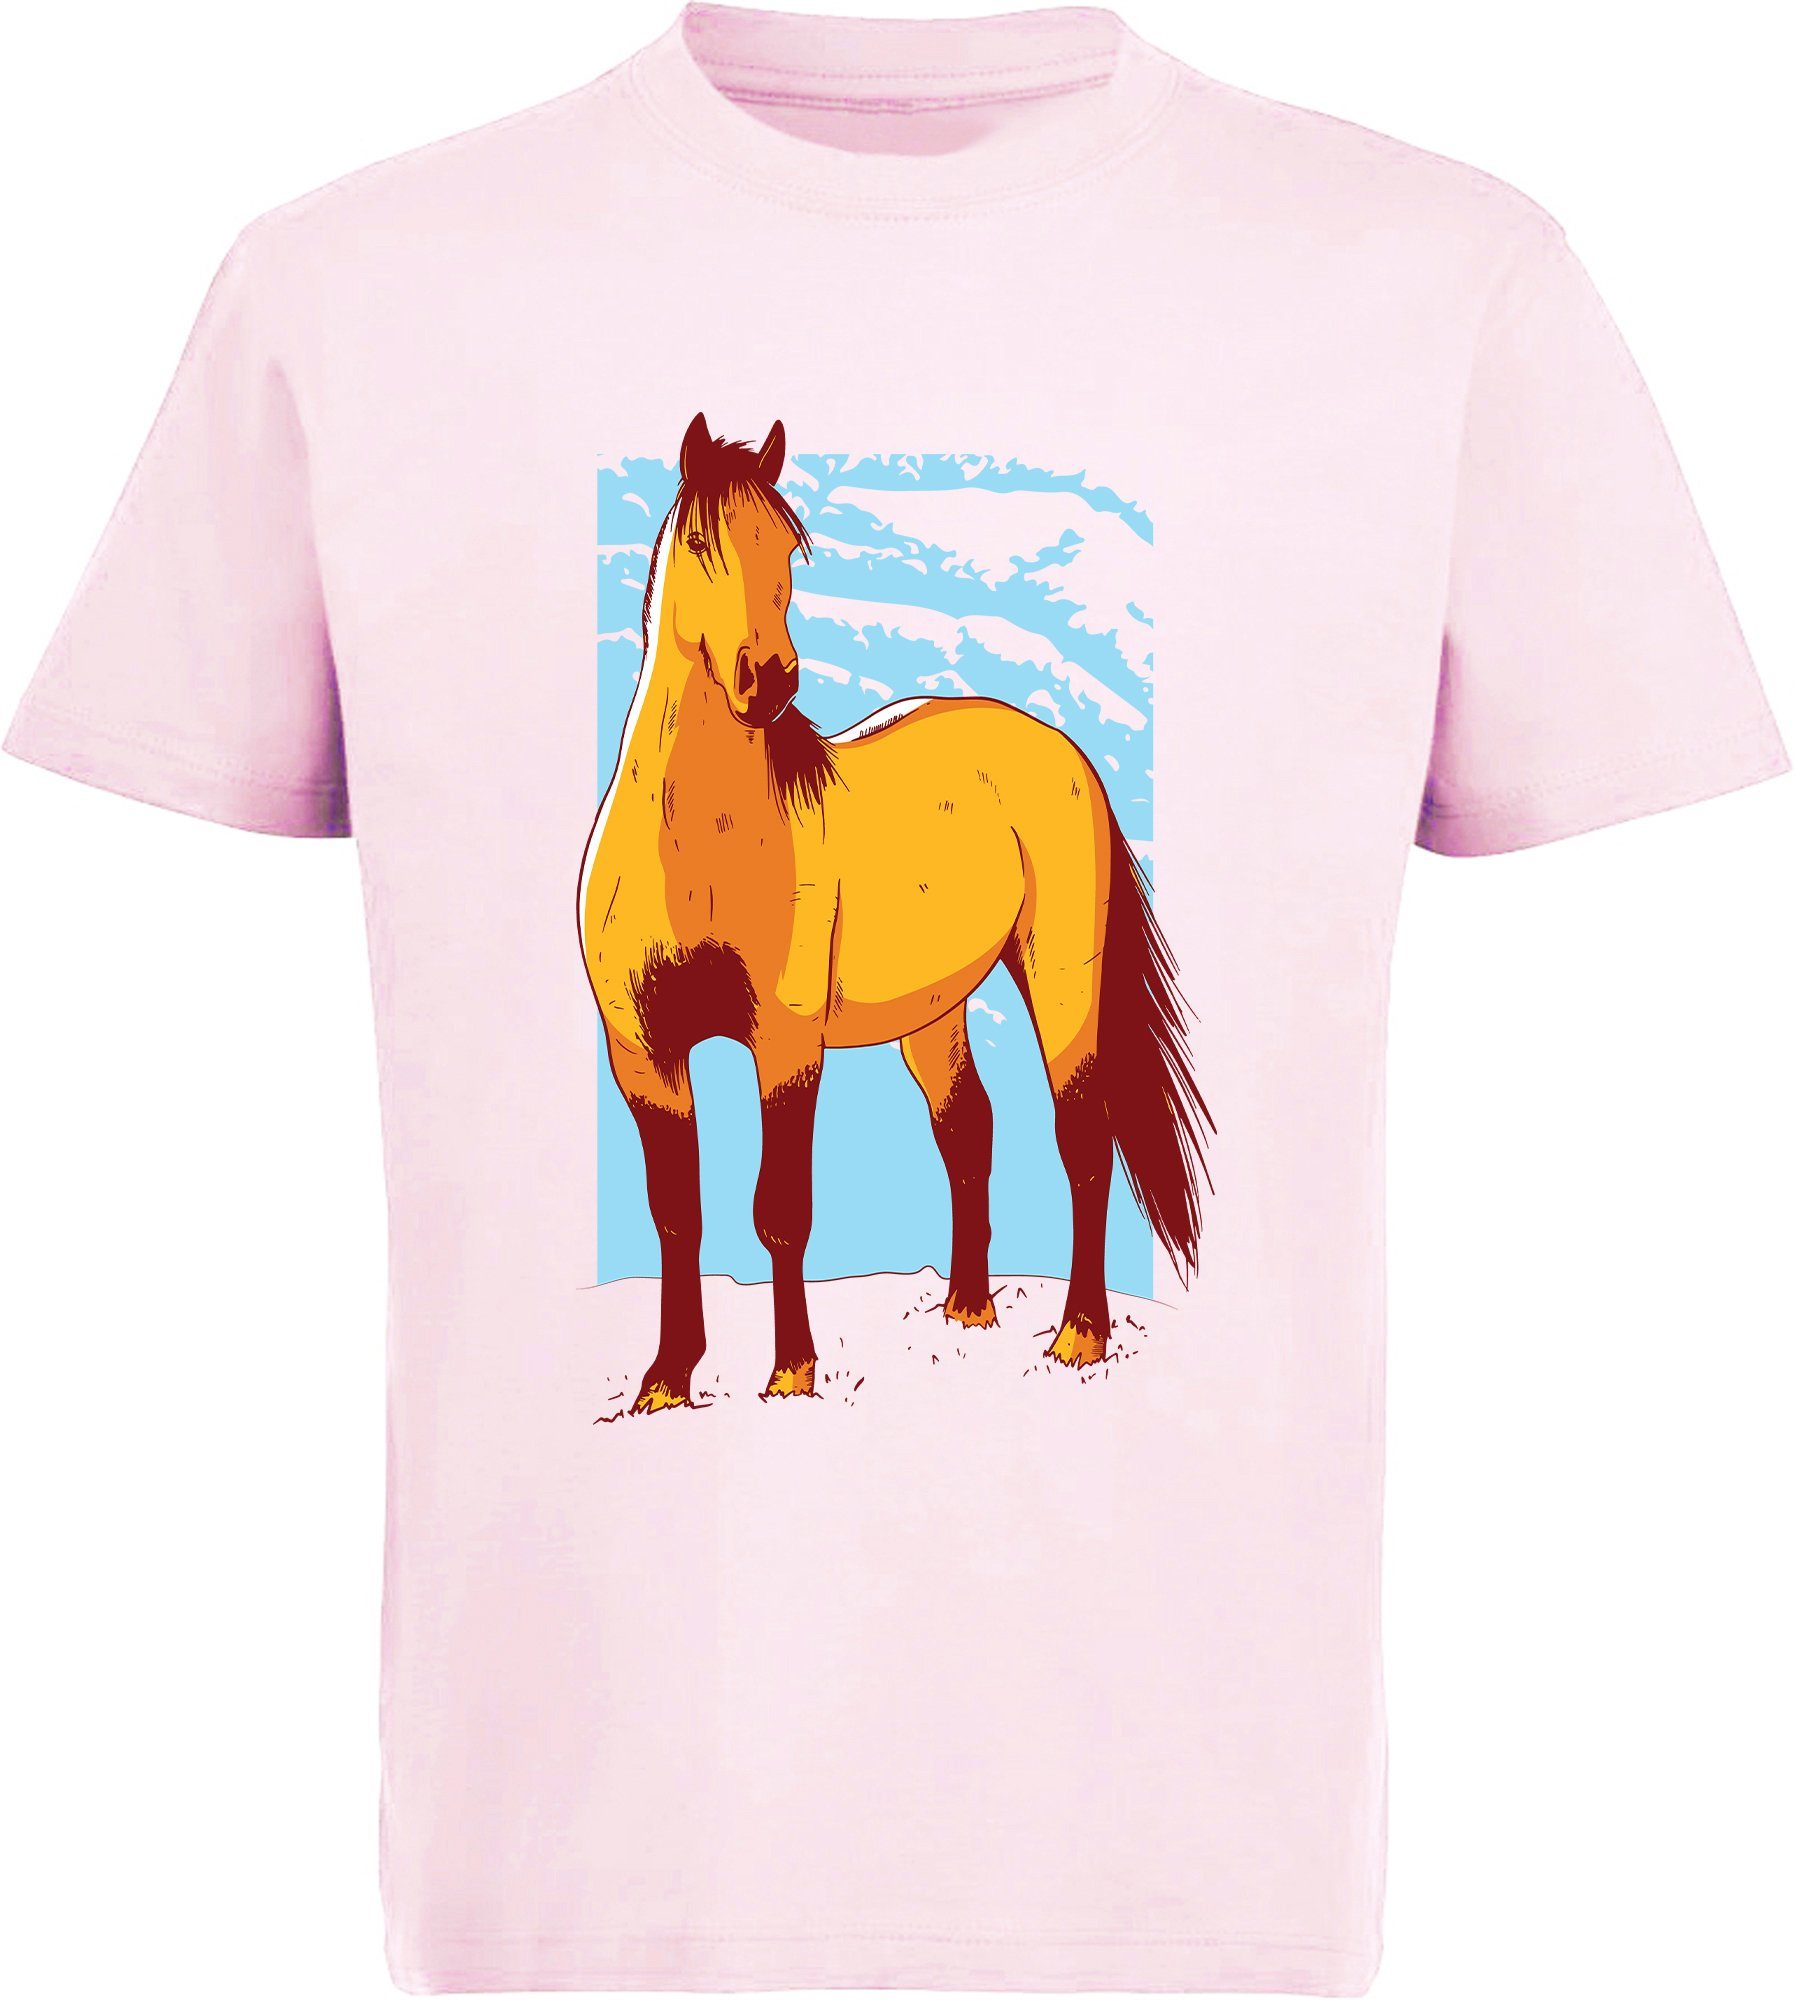 MyDesign24 Print-Shirt bedrucktes Mädchen T-Shirt elegantes Pferd Baumwollshirt mit Aufdruck, i155 rosa